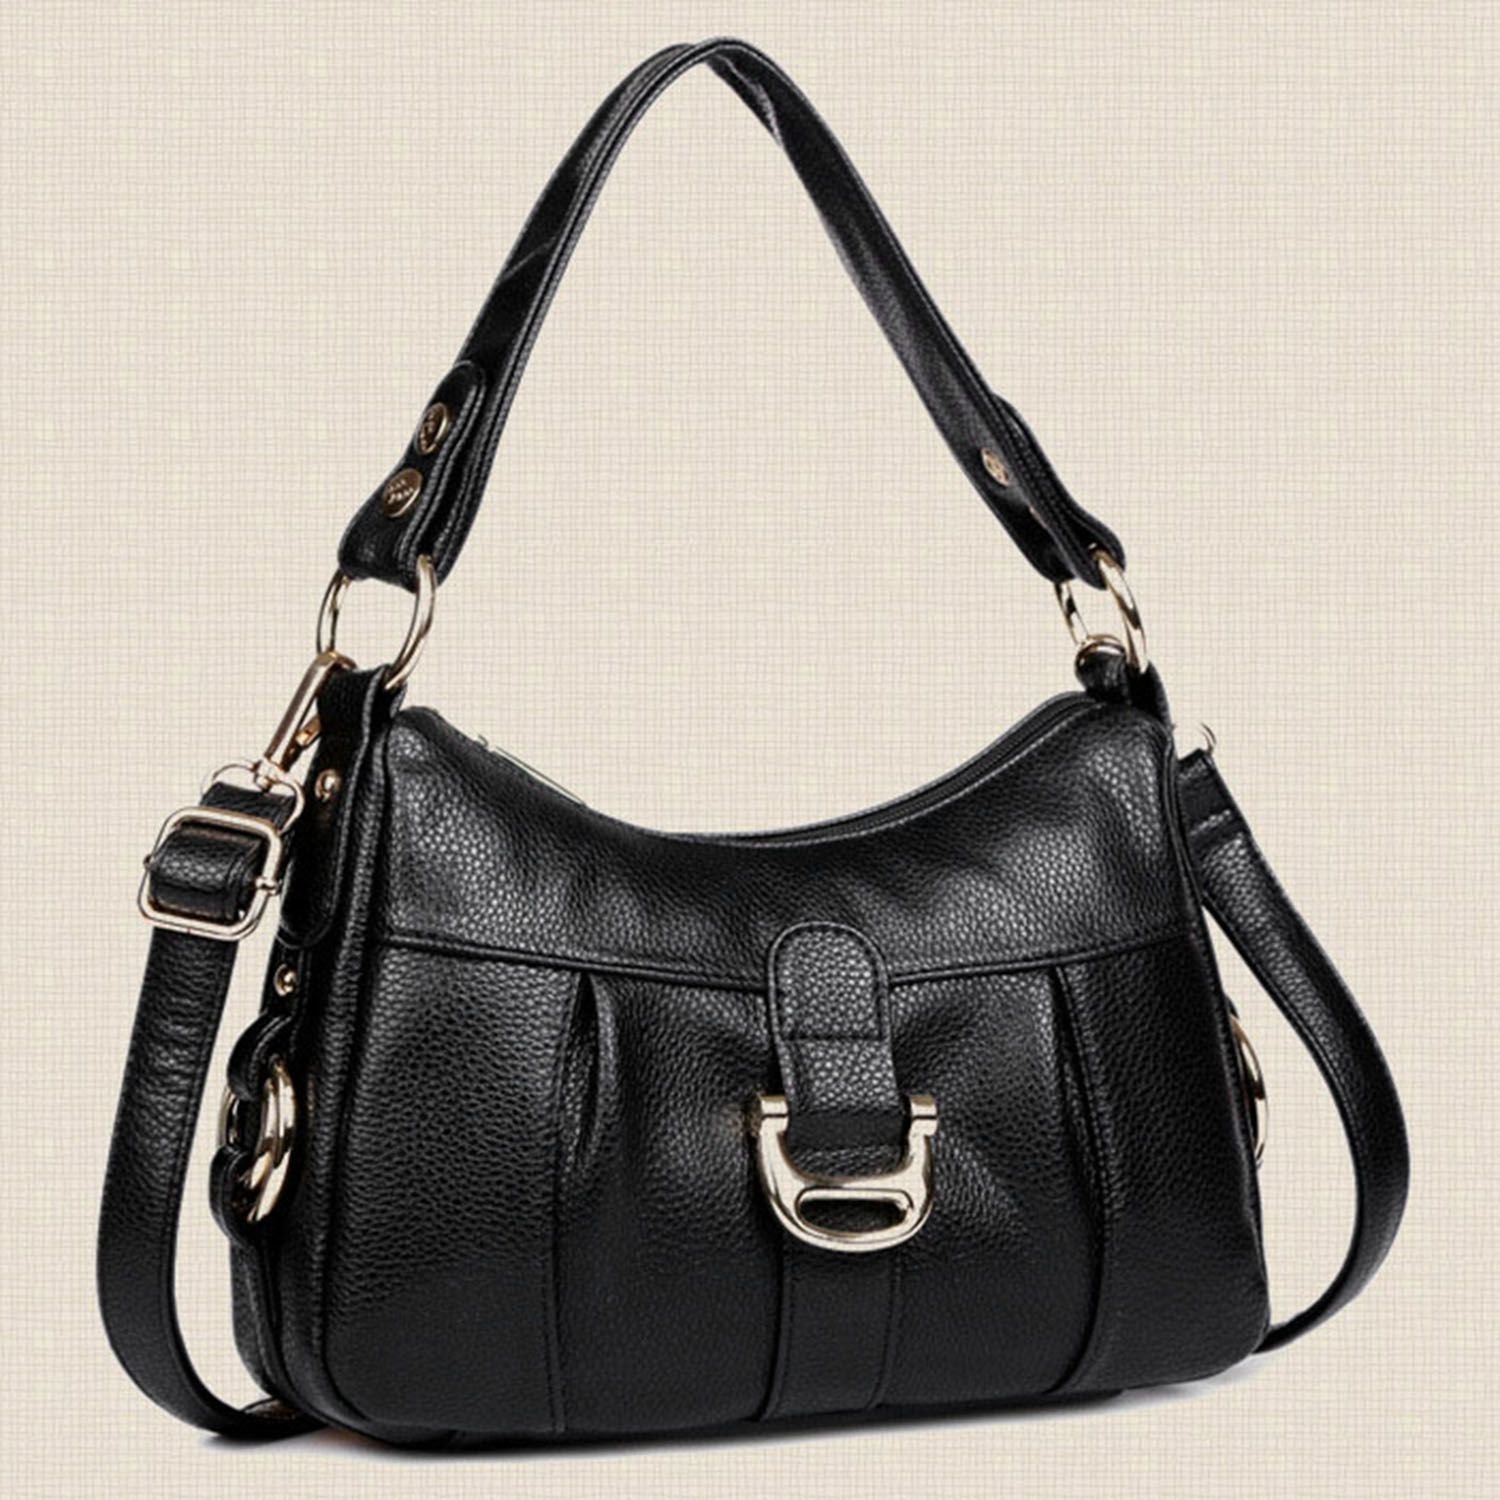 Aibkhk Handbags Women Bags Designer Leather Ladies Shoulder Casual Crossbody Soft Top-Handle Bags - ebowsos